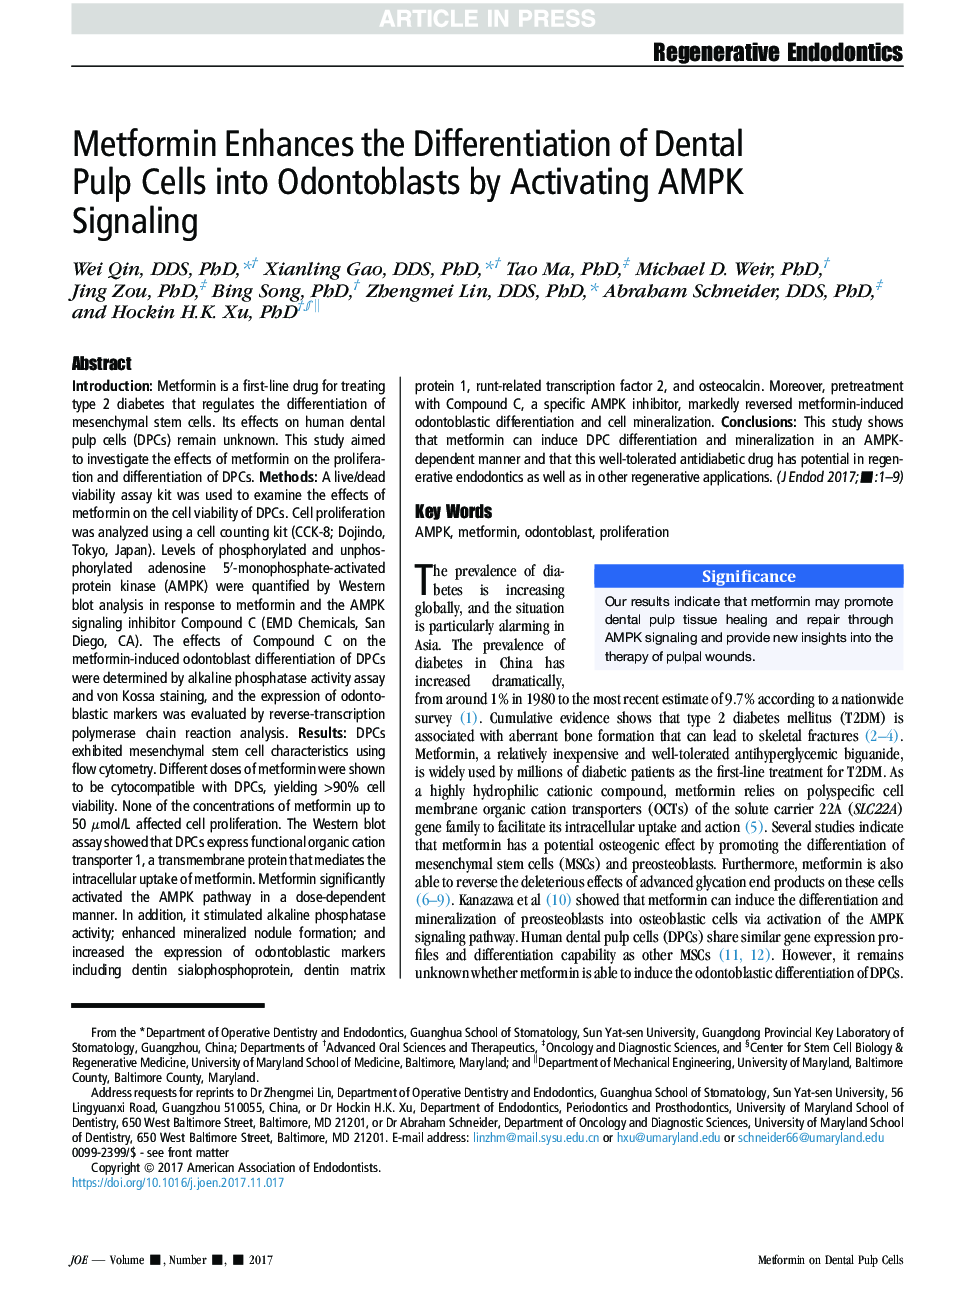 Metformin Enhances the Differentiation of Dental Pulp Cells into Odontoblasts by Activating AMPK Signaling